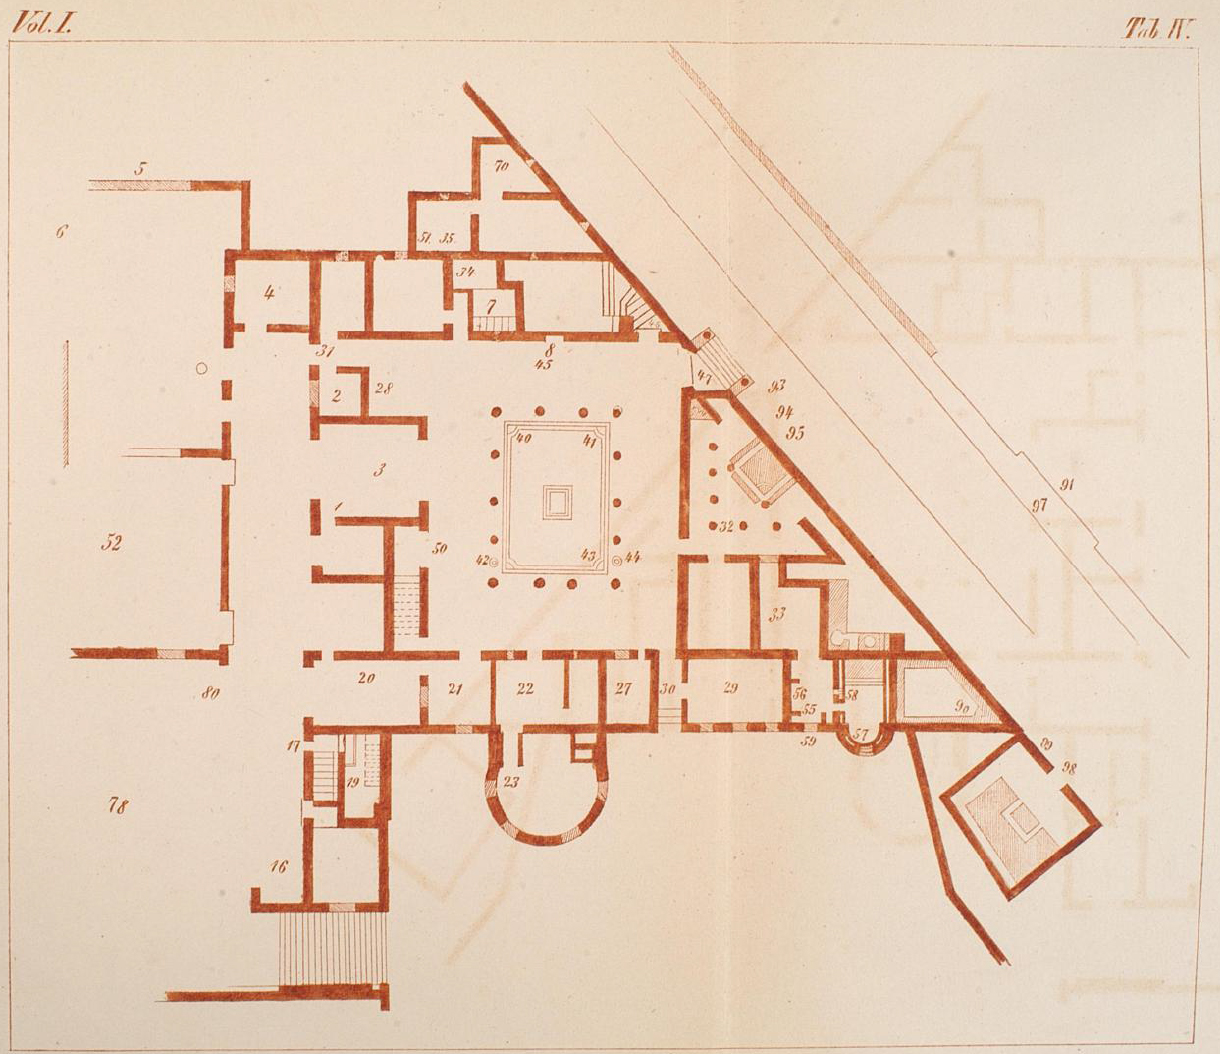 Villa of Diomedes. Plan of main floor by F. la Vega showing find locations reported in PAH.

See Fiorelli G., 1860. Pompeianarum antiquitatum historia, Vol. 1: 1748 to 1818, Naples, Tab. IV, pp. 118-133, p. 156-160, p. 276-280.

See PAH, 1,1, addendum, p.156 - 9 Febbraio 1771. Commincia lo scoprimento della casa di campagna, detta di Arrio Diomede. 

(“9th February 1771. Began the uncovering of the country house, said to be of Arrio Diomede.”) 